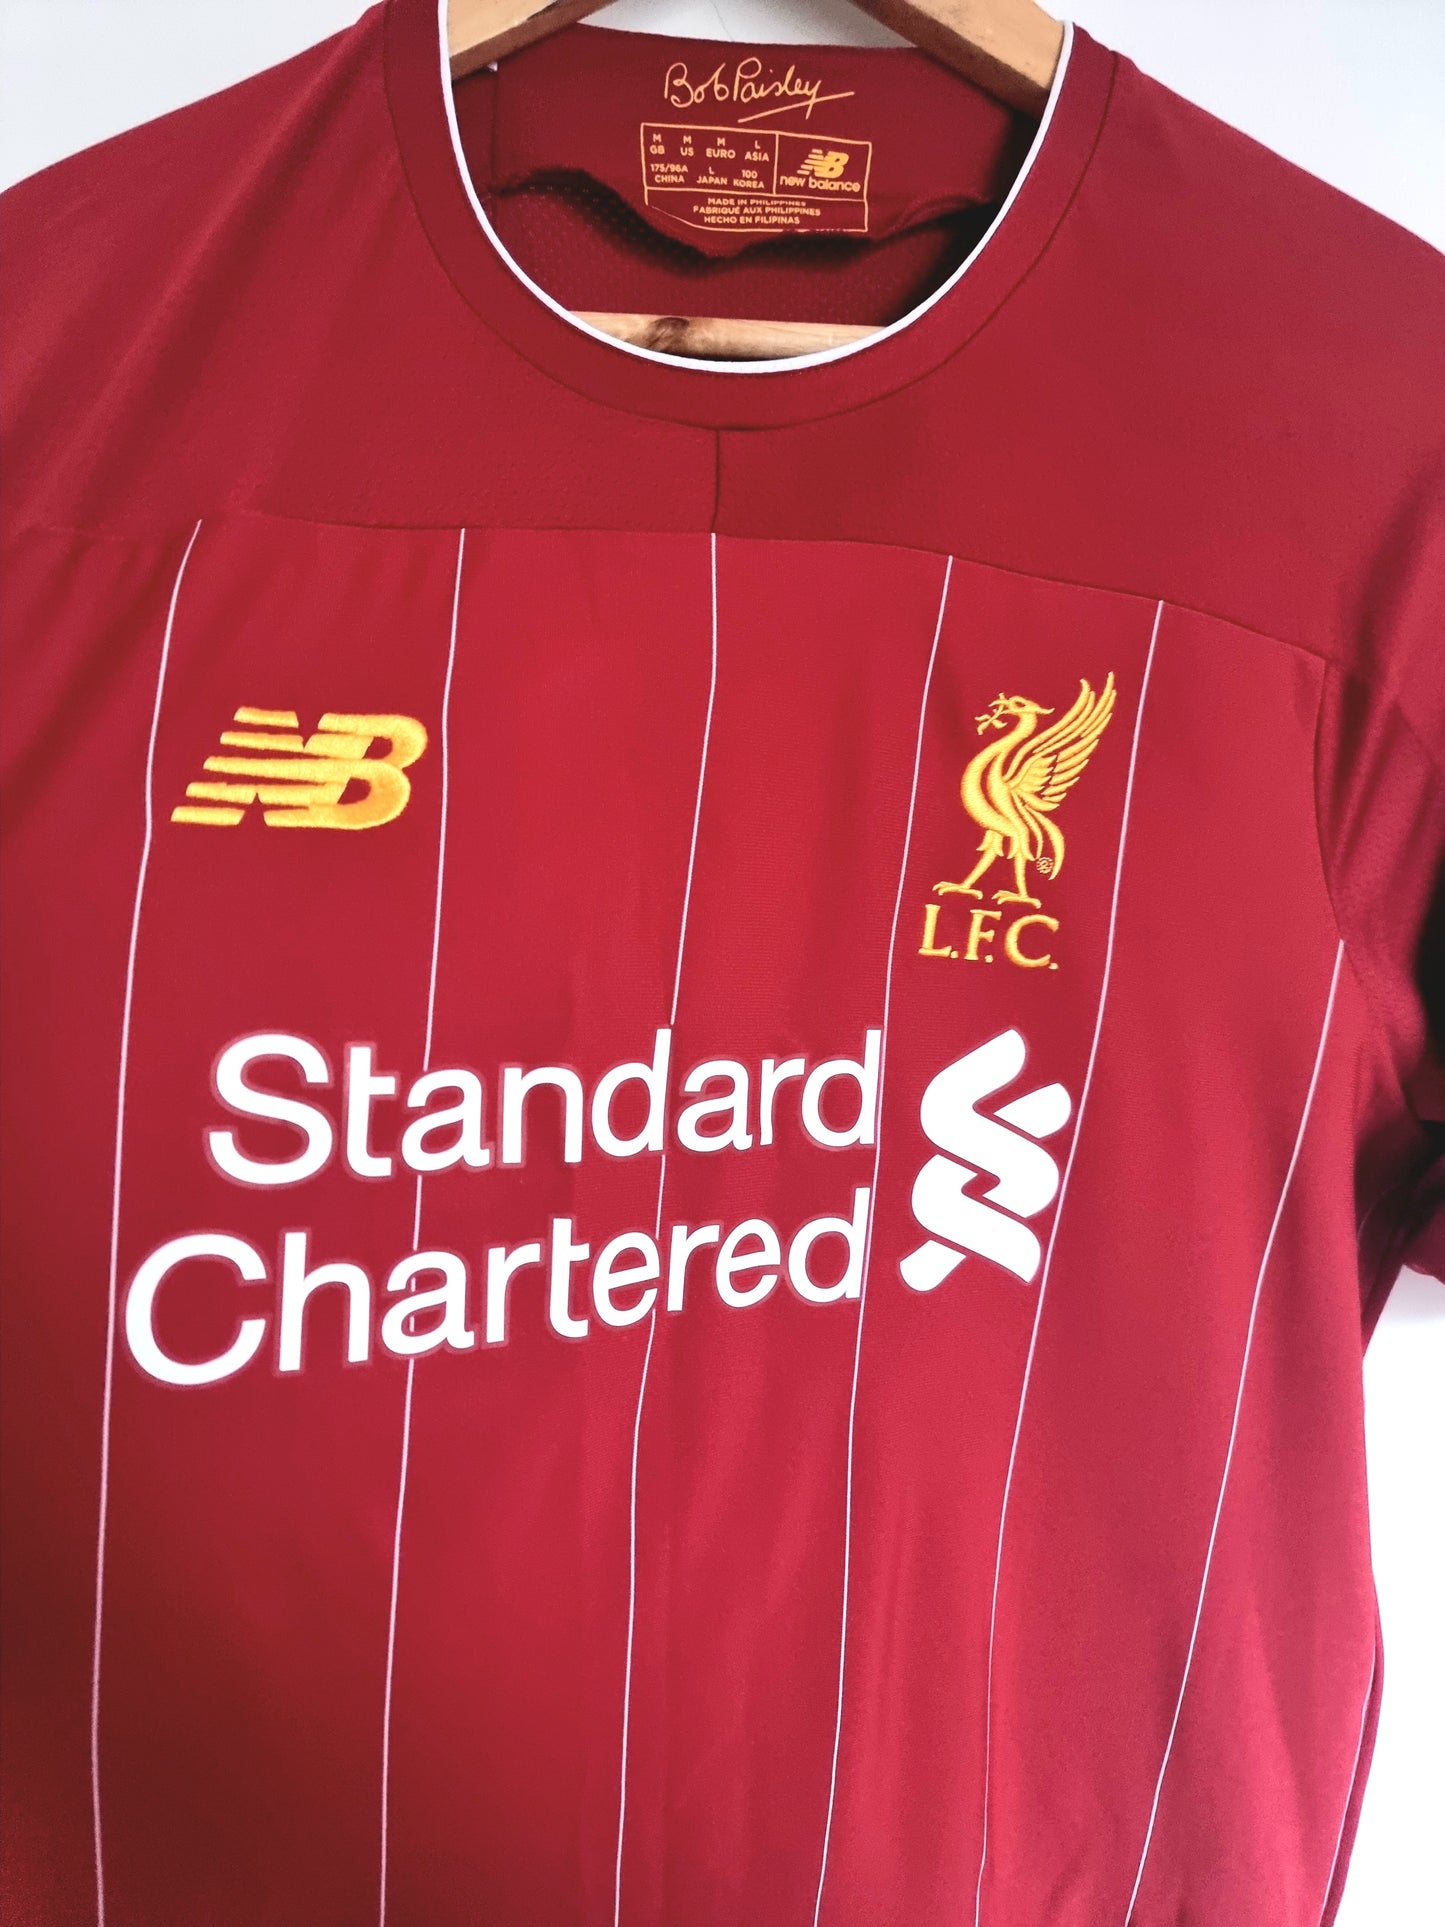 New Balance Liverpool 19/20 Home Shirt Medium